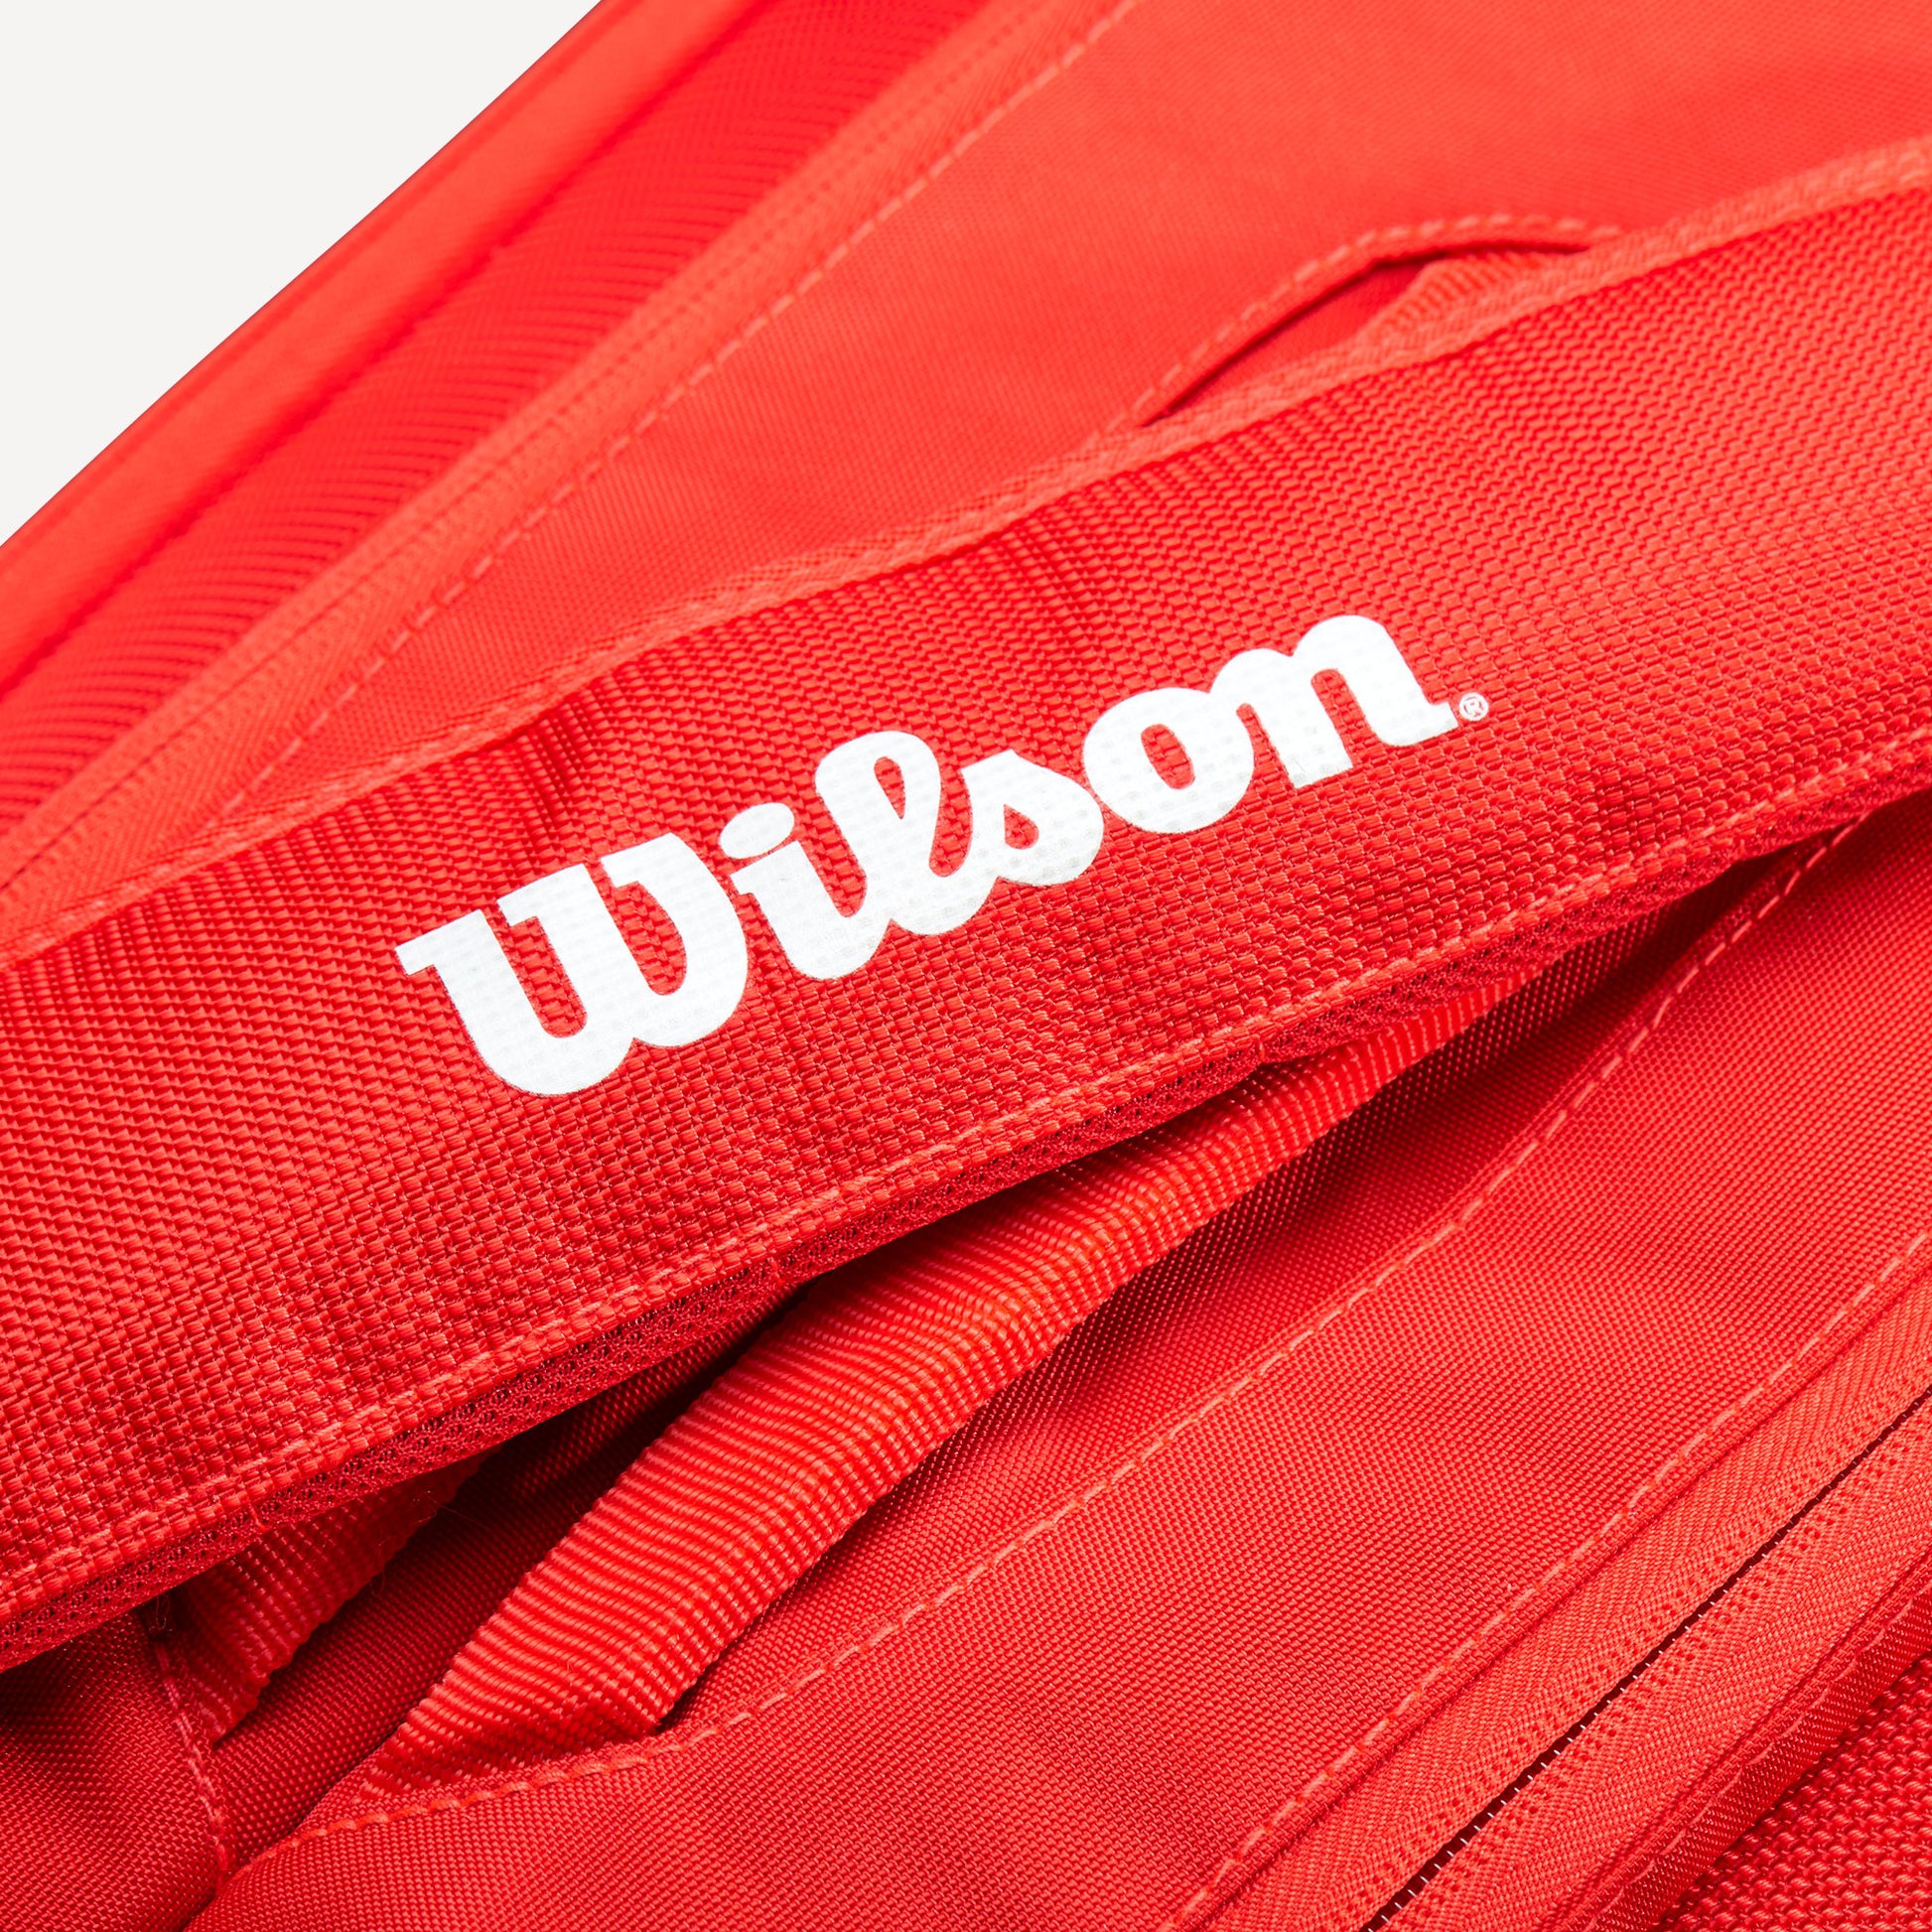 Wilson Super Tour 6 Pack Tennis Bag Red (5)